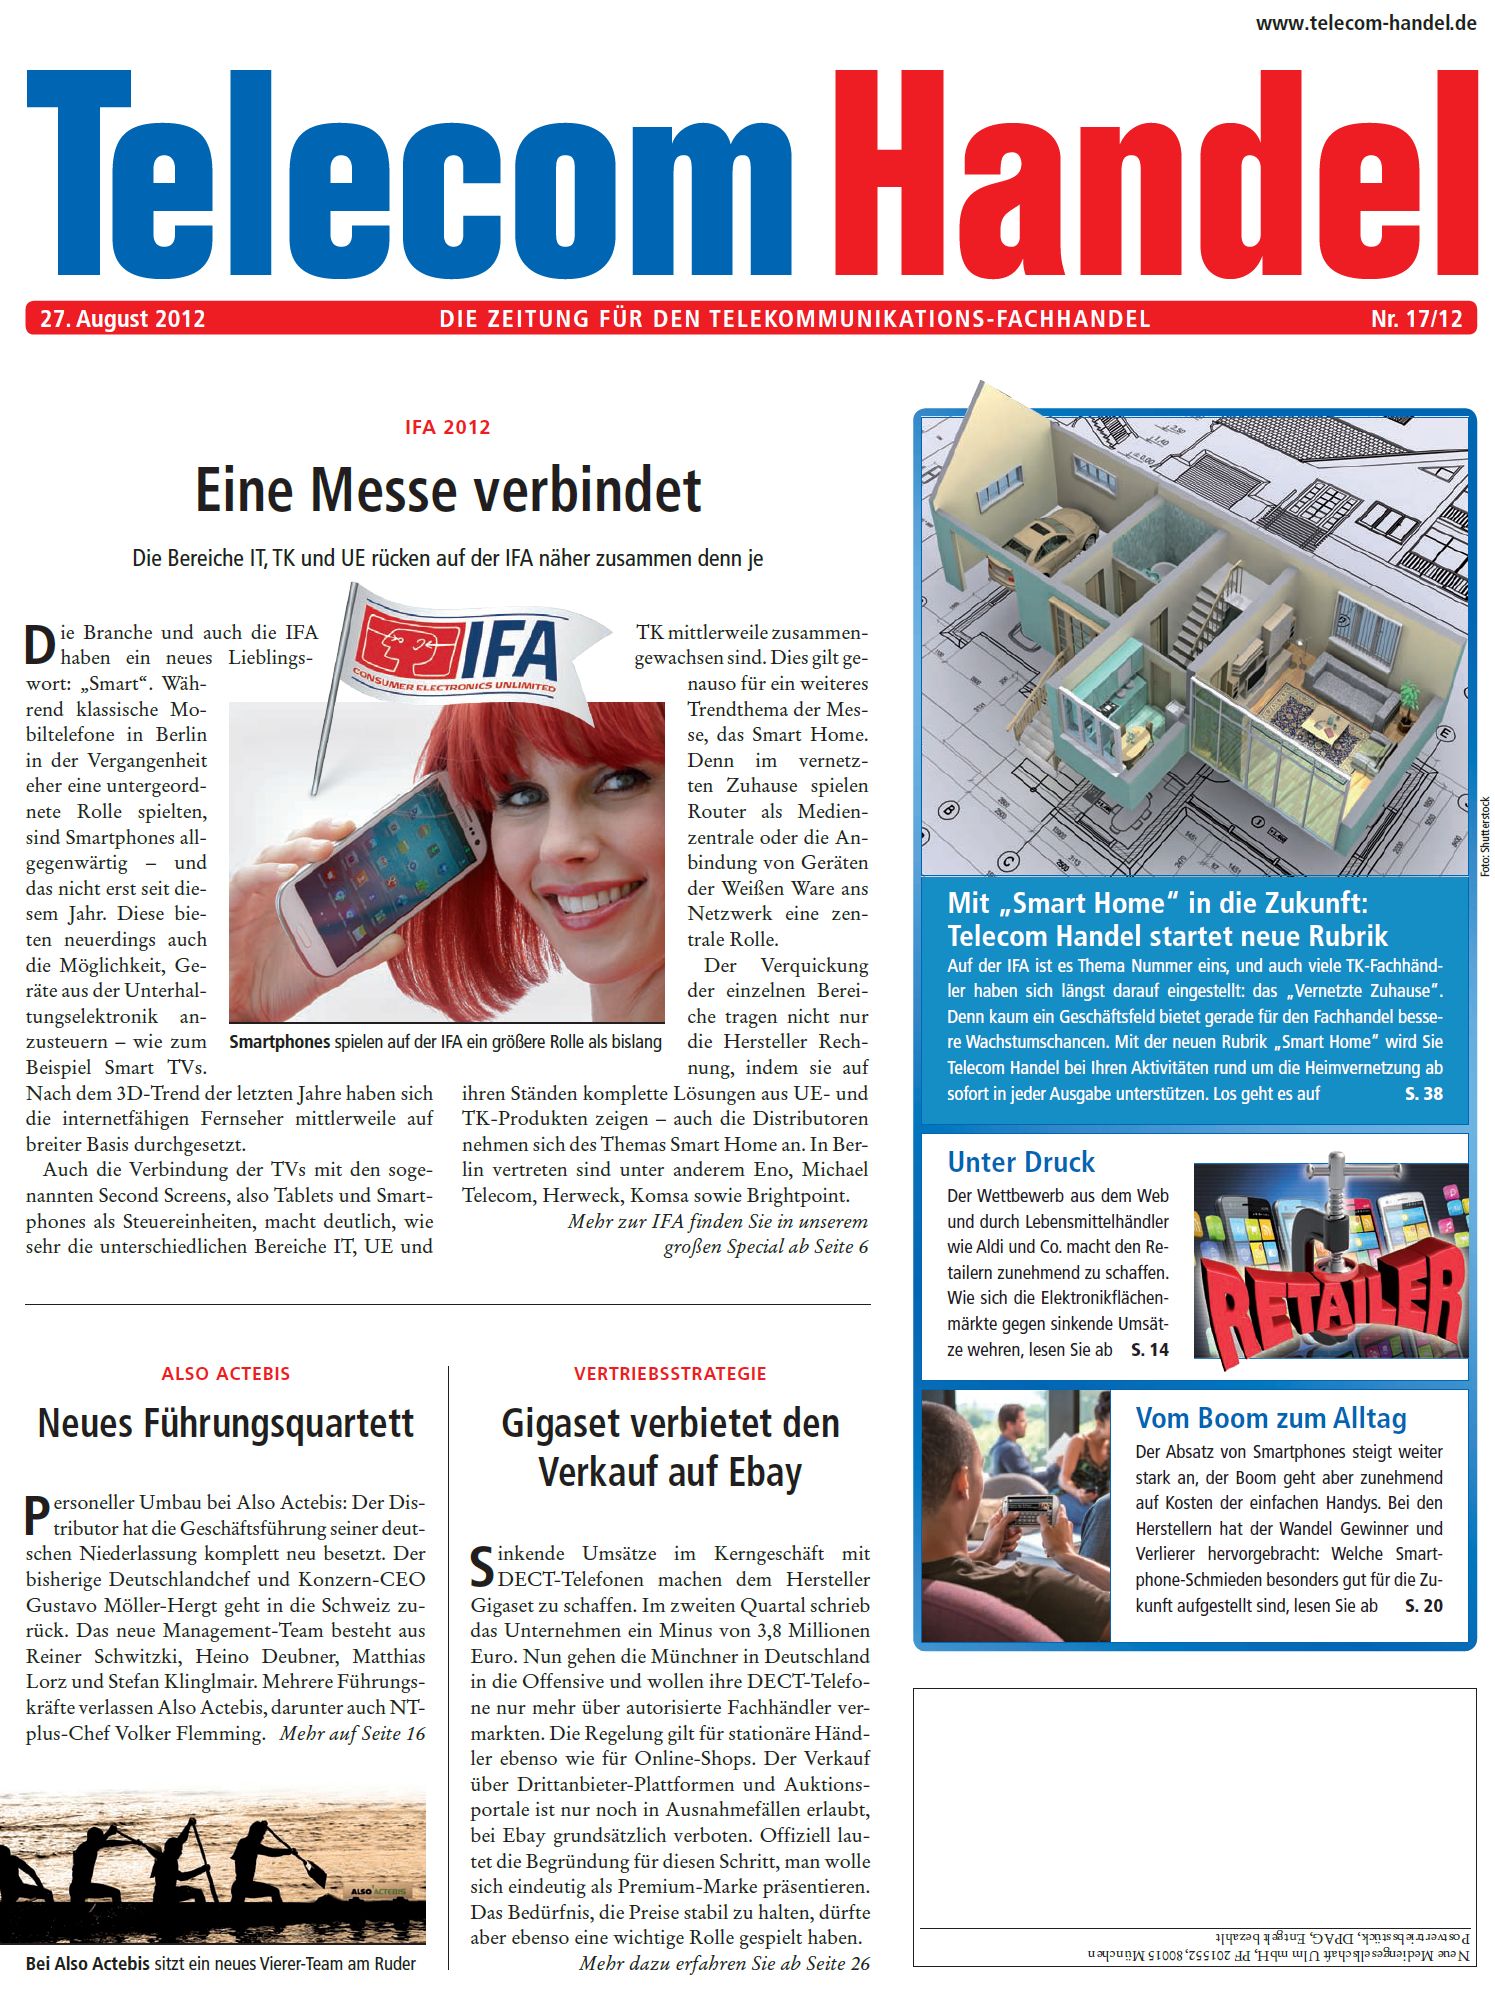 Telekom Handel Ausgabe 17/2012